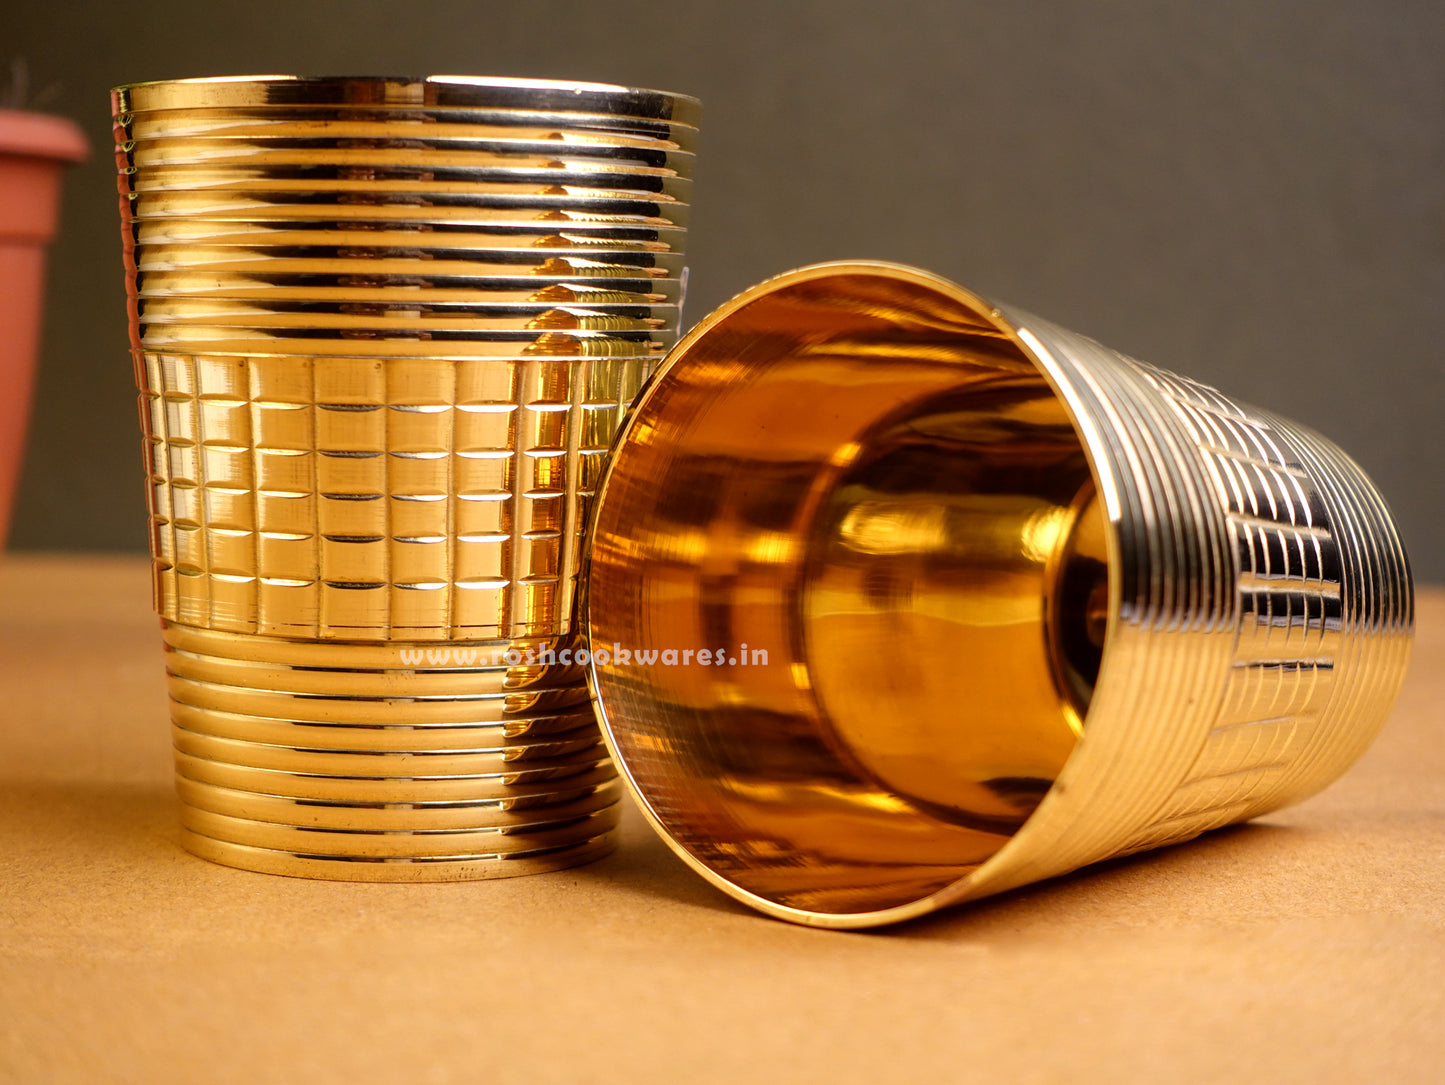 Glass Checks / Rings - Bronze - Set of 2.